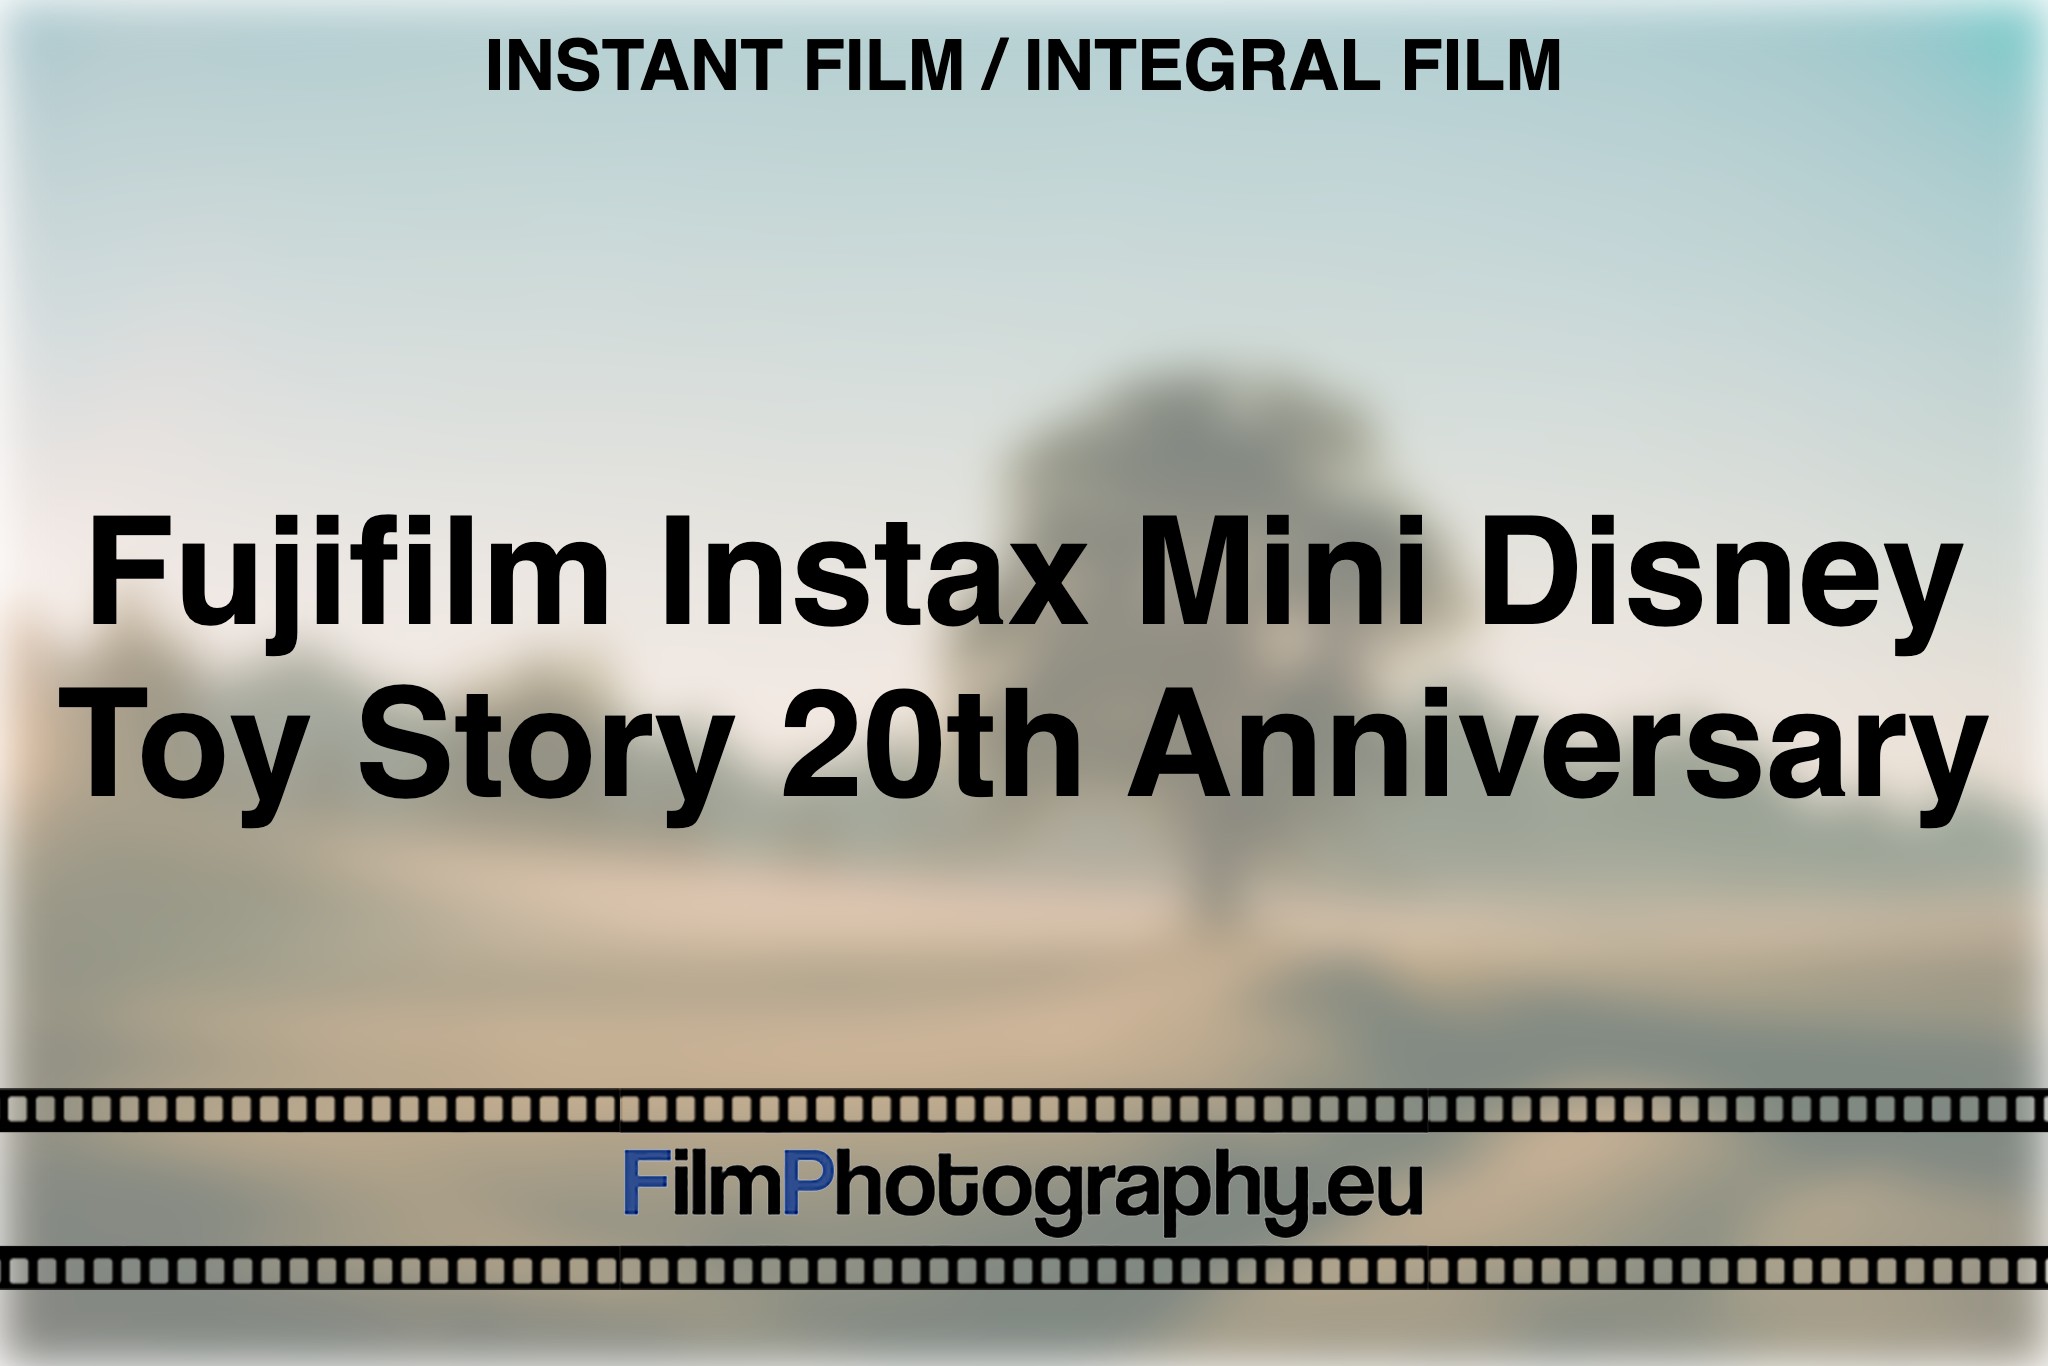 fujifilm-instax-mini-disney-toy-story-20th-anniversary-instant-film-integral-film-bnv